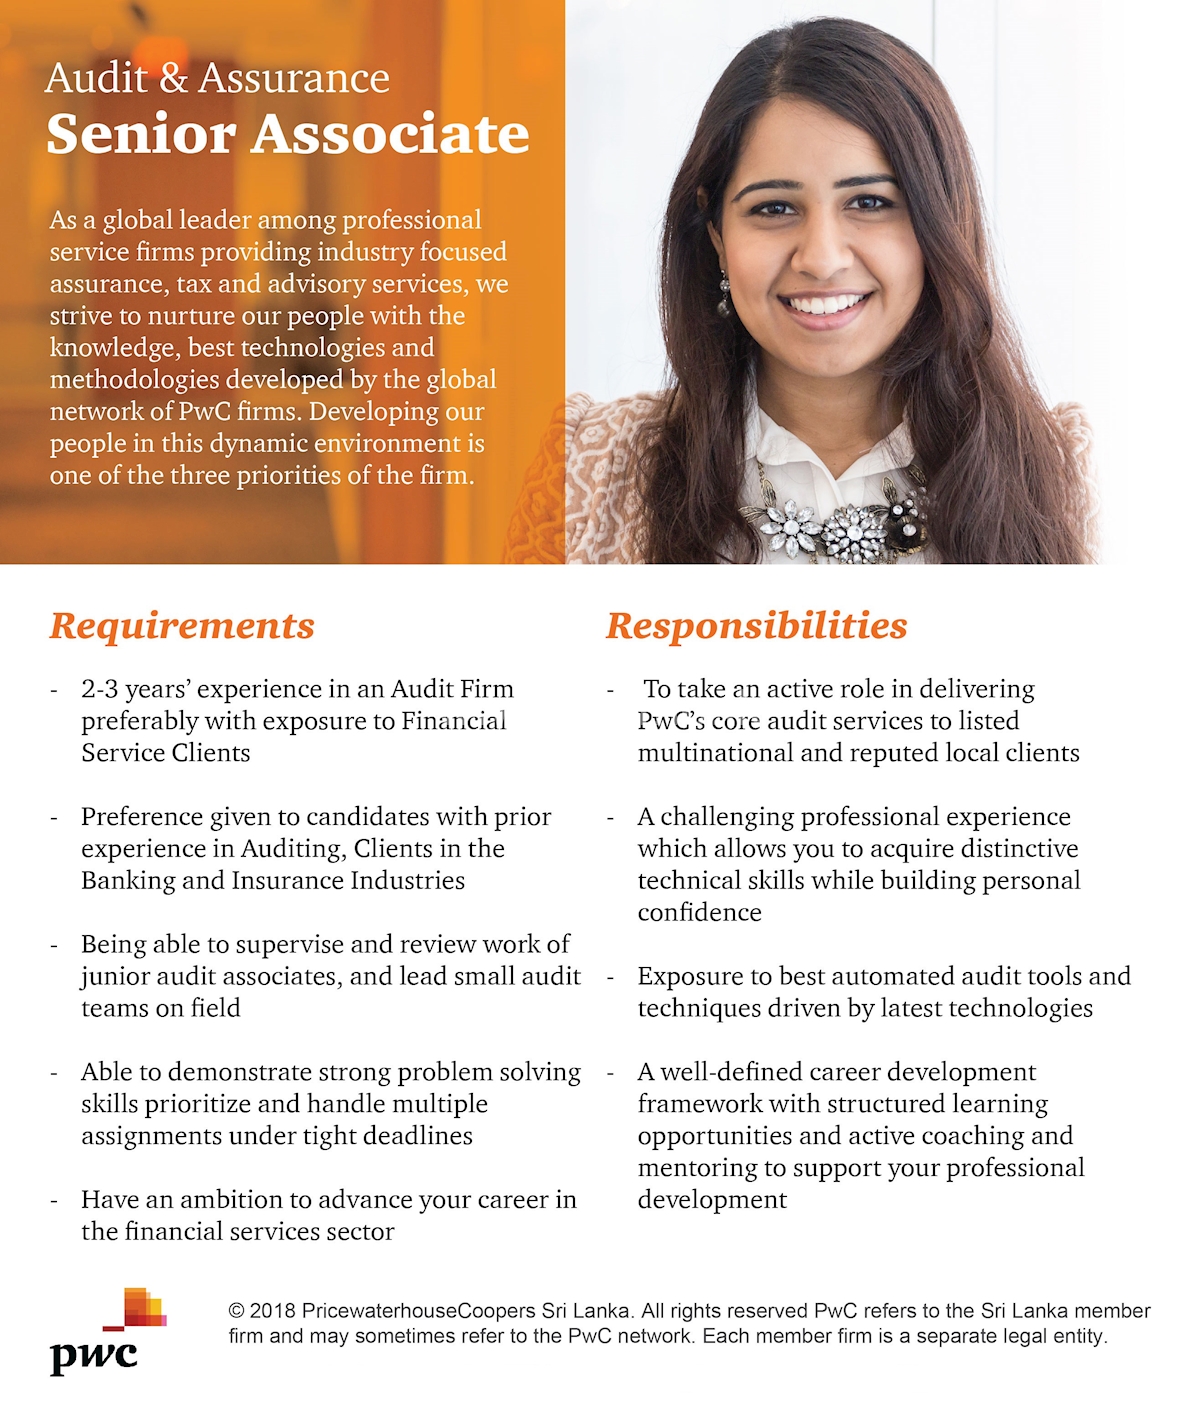 Audit and Assurance - Senior Associate